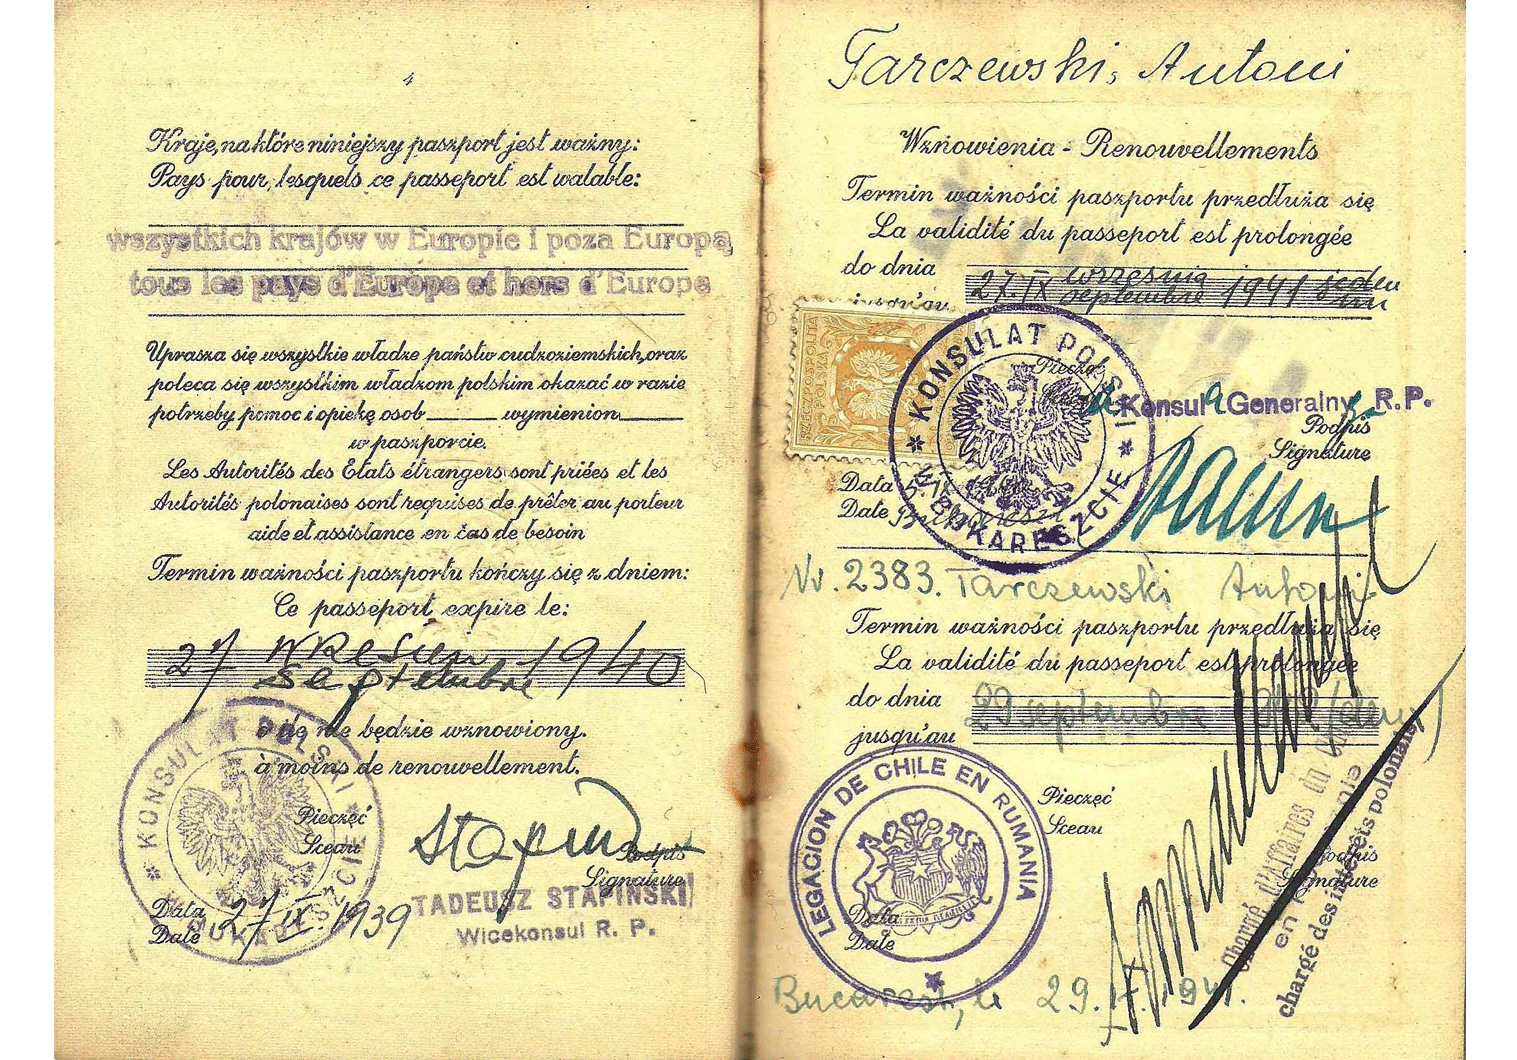 WW2 life-saving passport extension